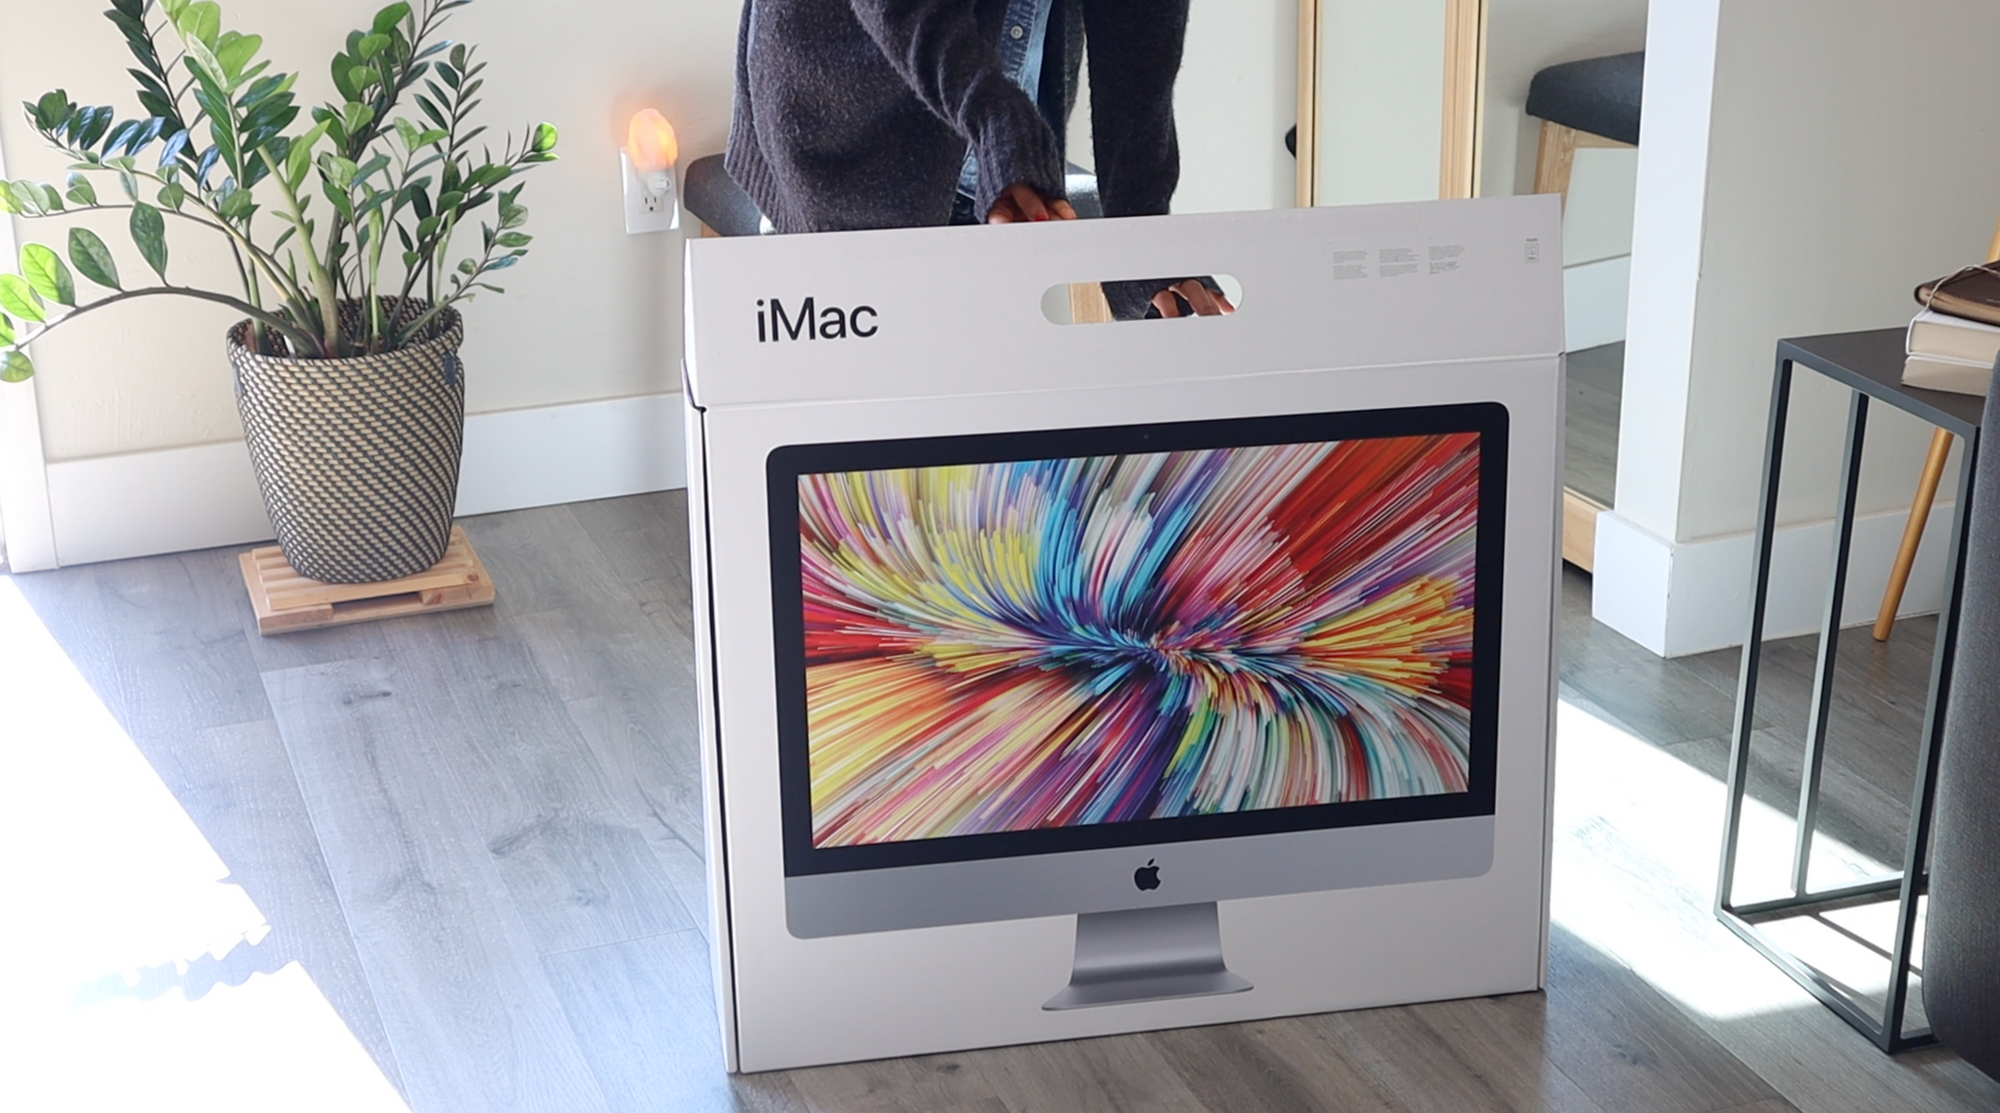 Unboxing of Large iMac